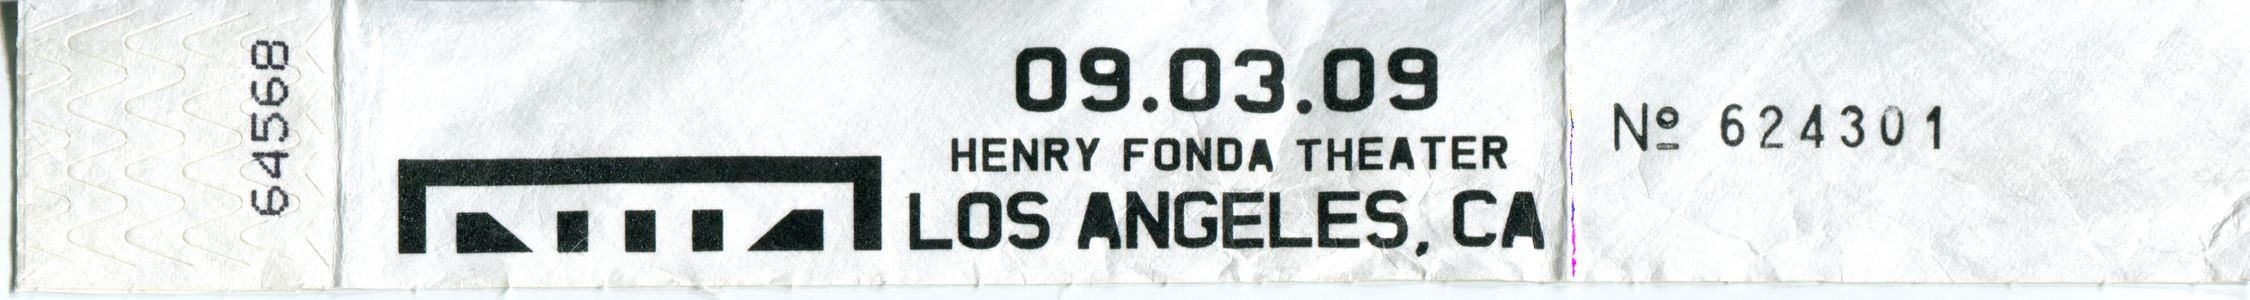 2009/09/08 Ticket